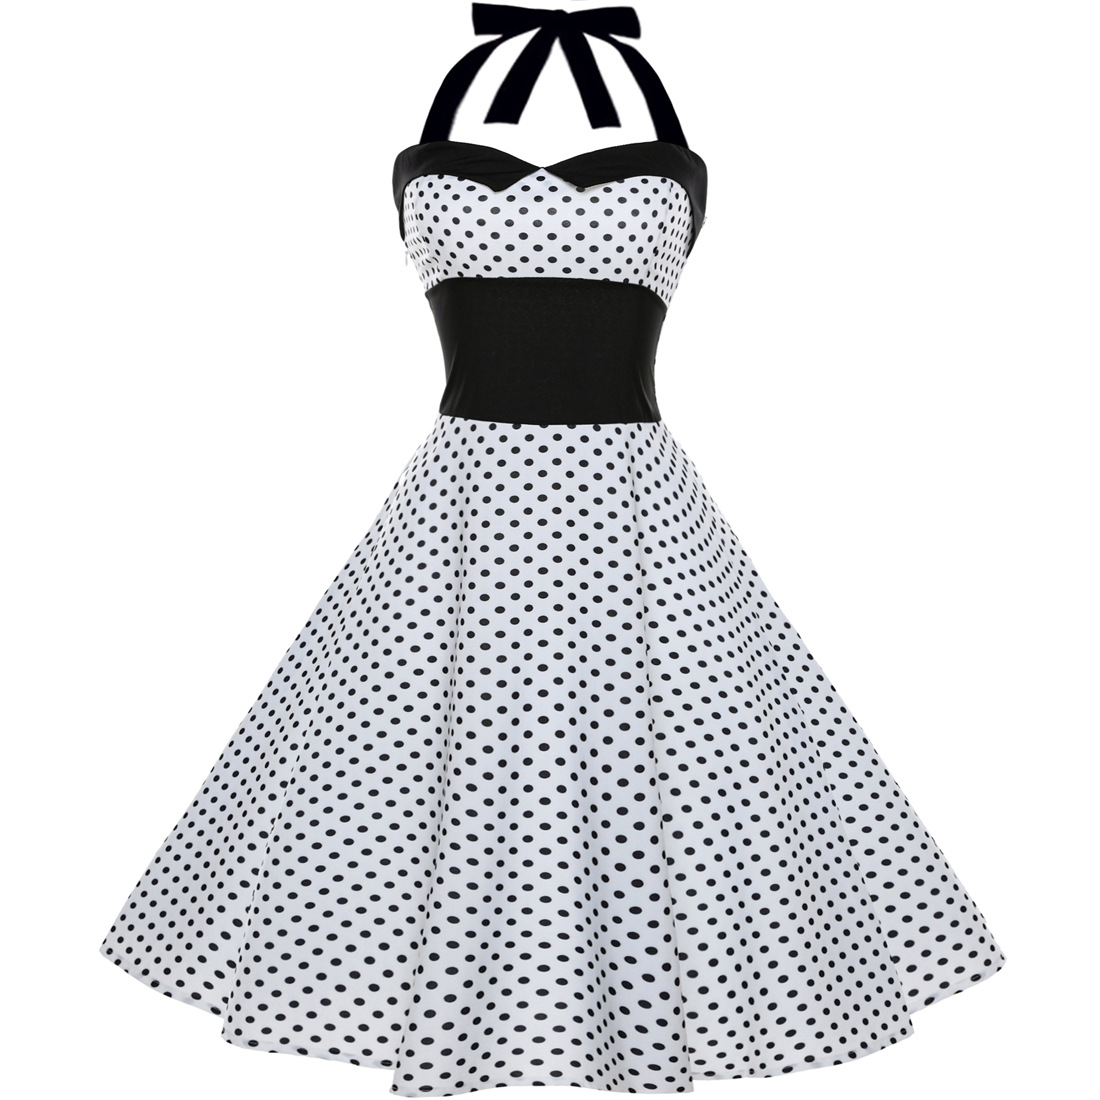 Vintage Polka Dot/Floral Dress Halter Backless Big Swing Women Casual Party Dress 1#